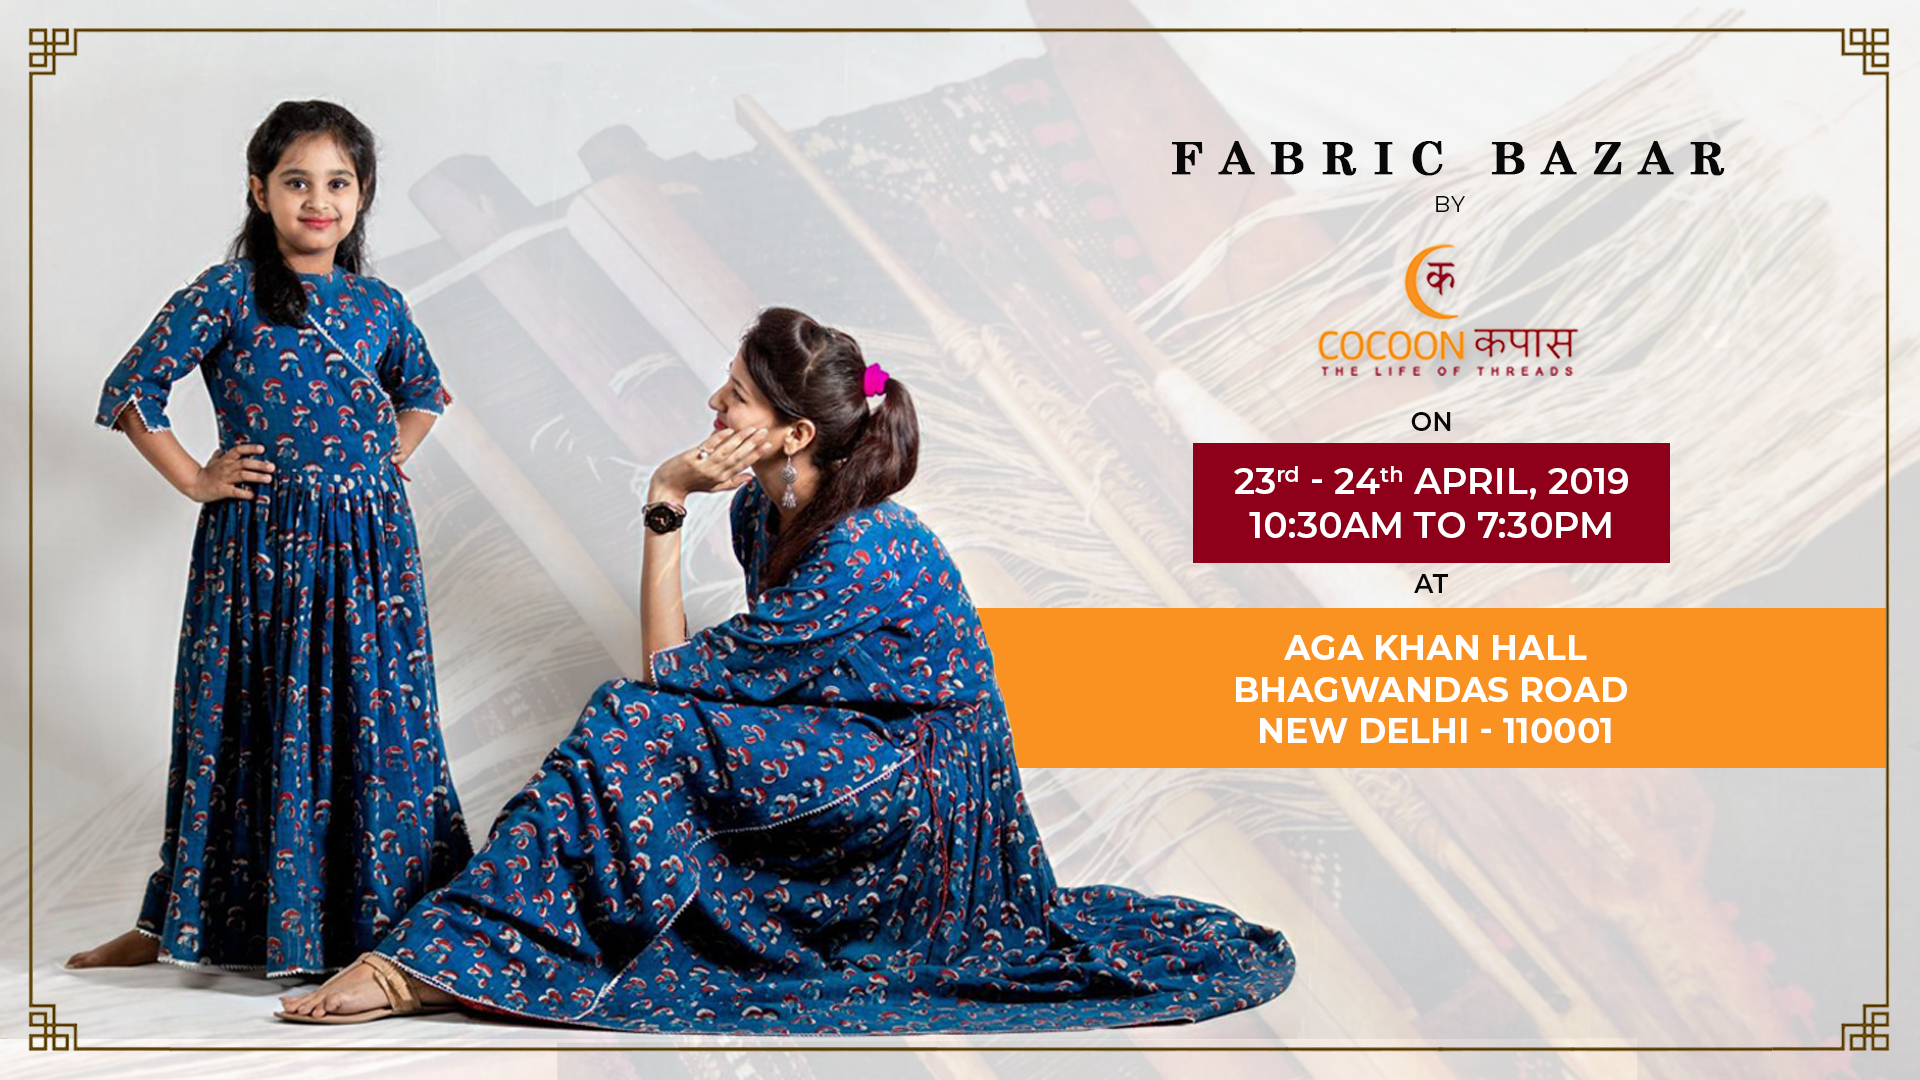 Fabric Bazar By Cocoon Kapas (23rd & 24th April, Aga Khan Hall), New Delhi, Delhi, India